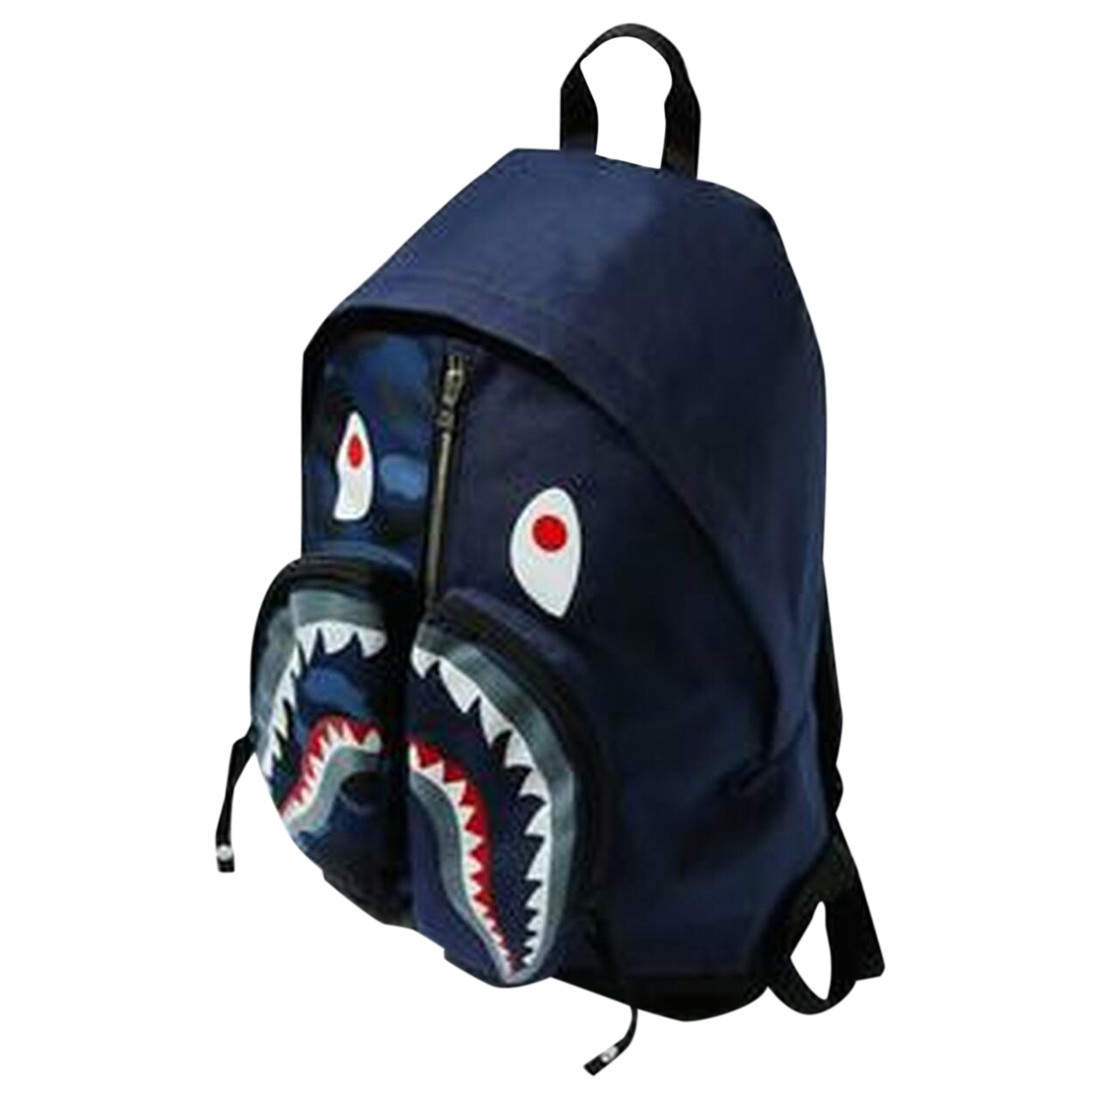 BAPE Blue Camo Medium Day Pack Backpack A Bathing Ape